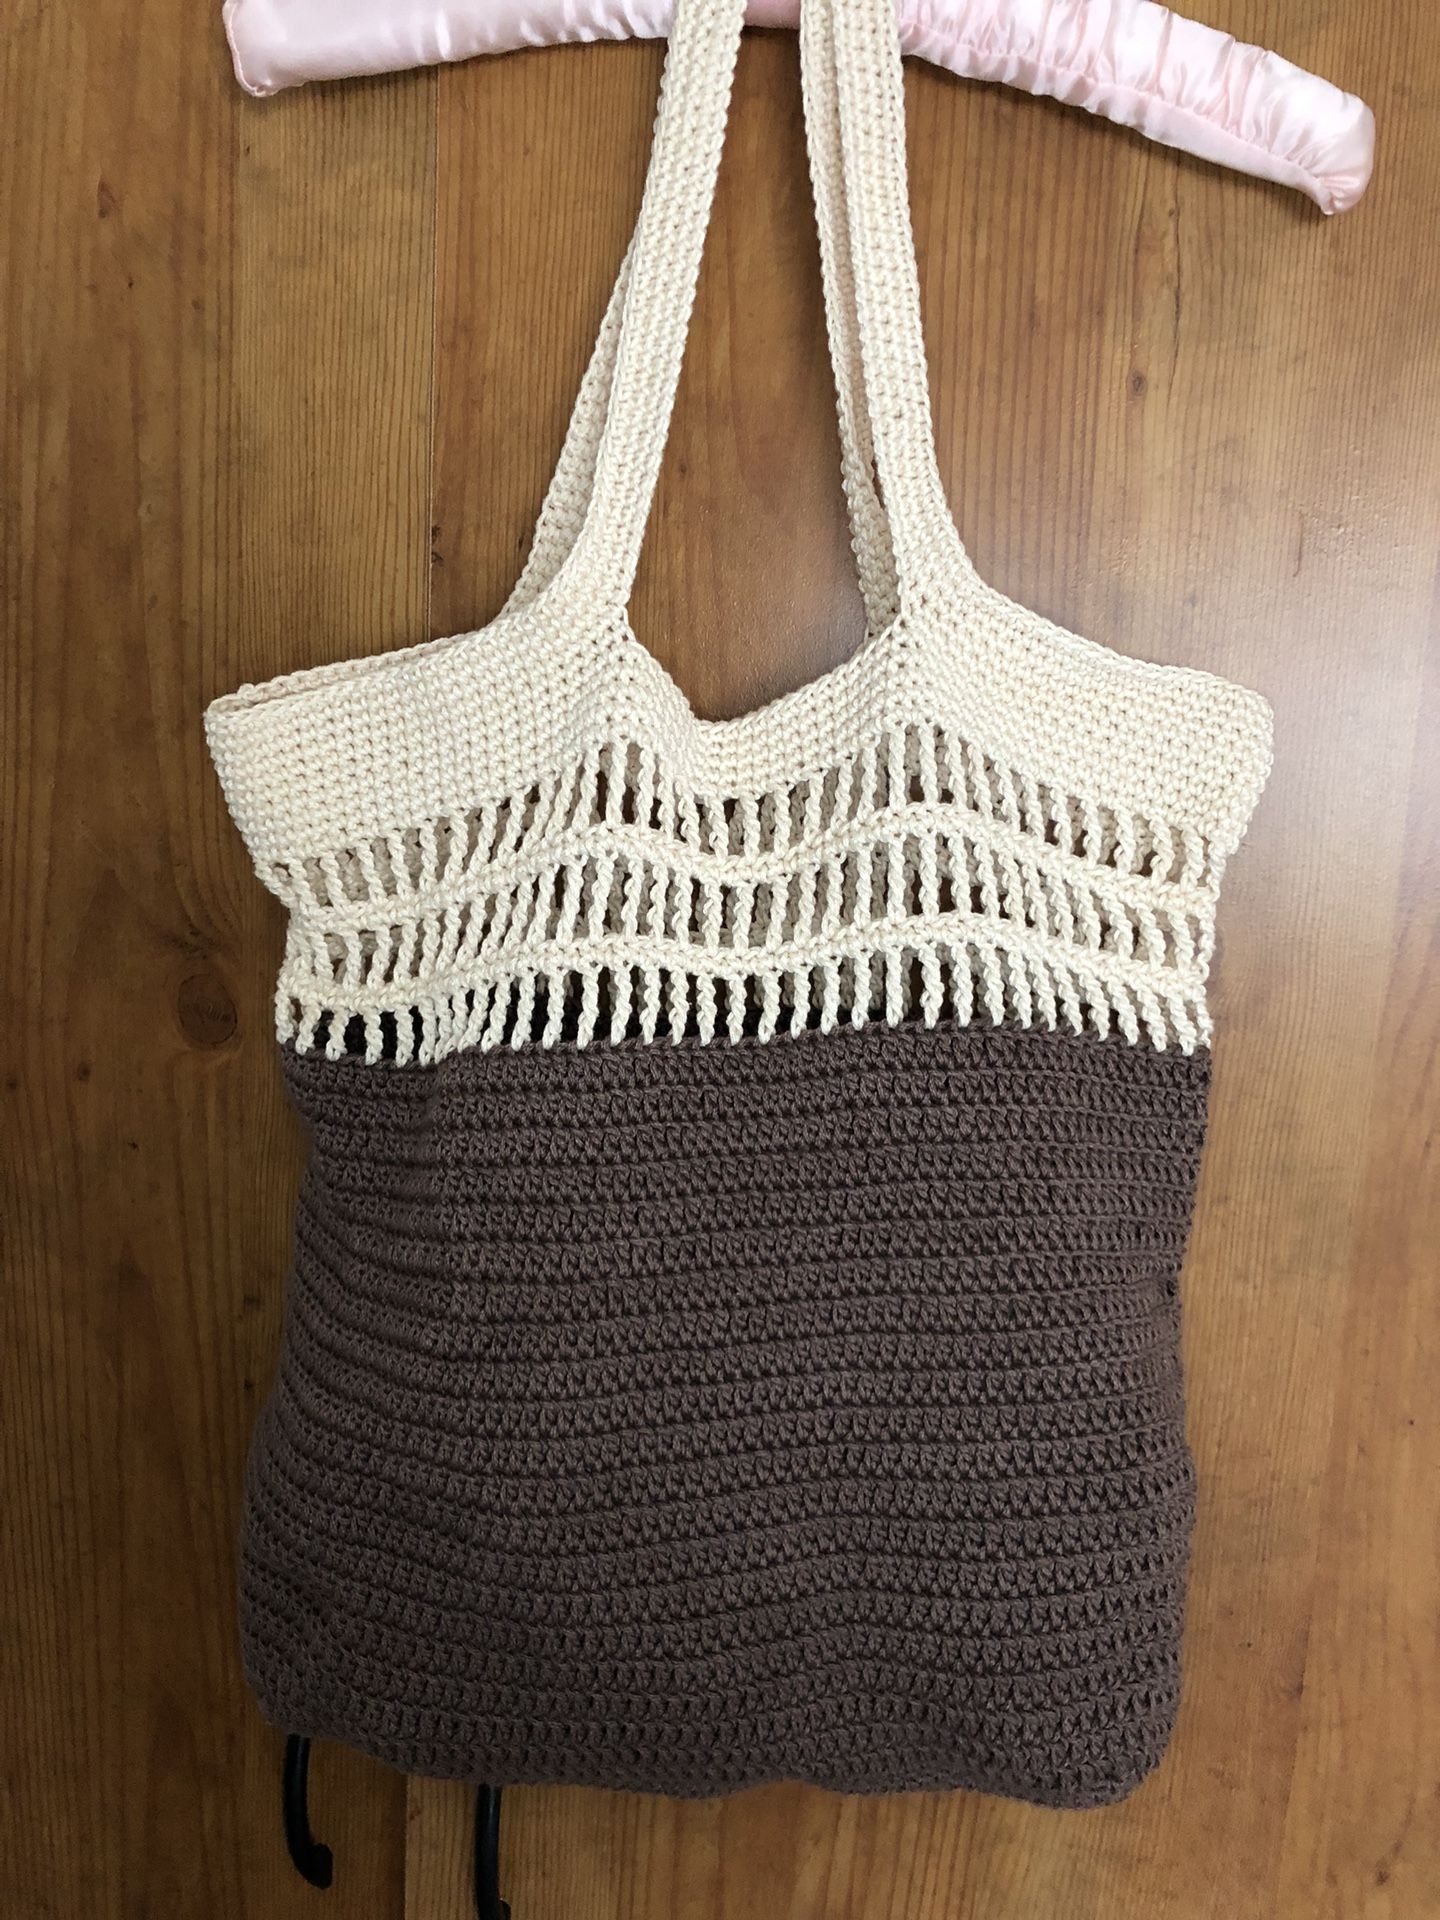 Crochet Tote Bag 